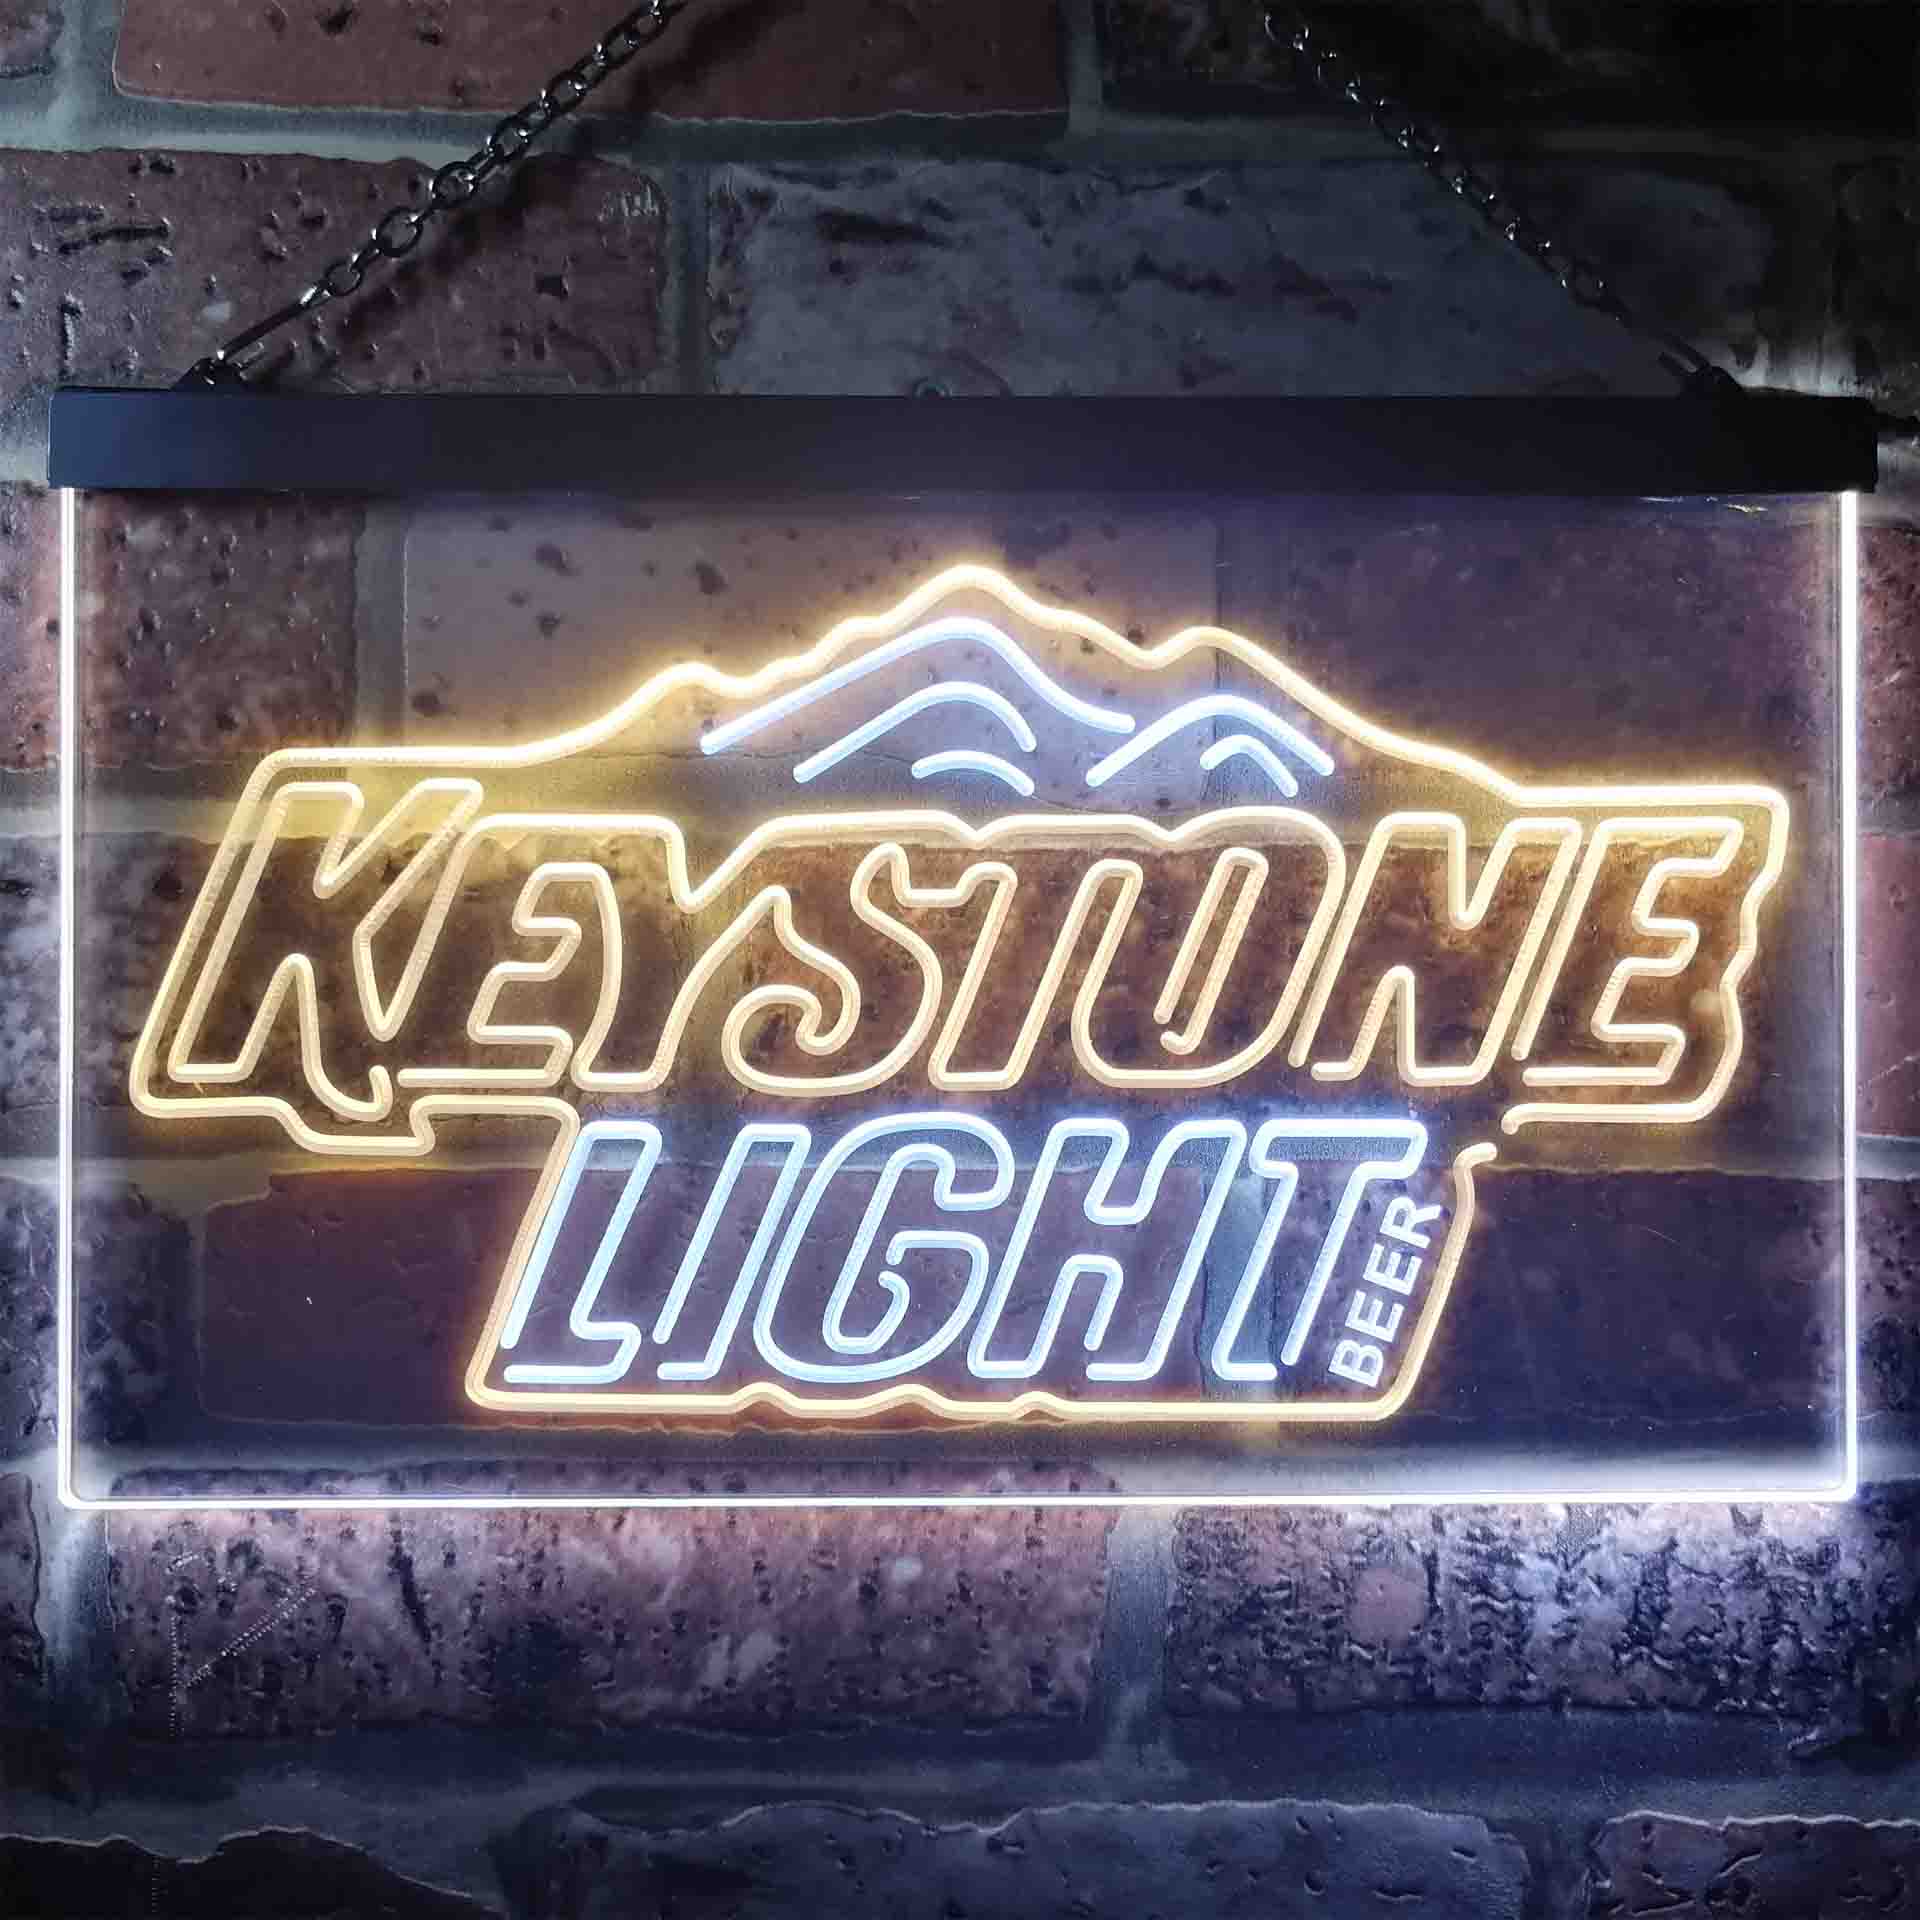 Keystones Light Beer LED Neon Sign